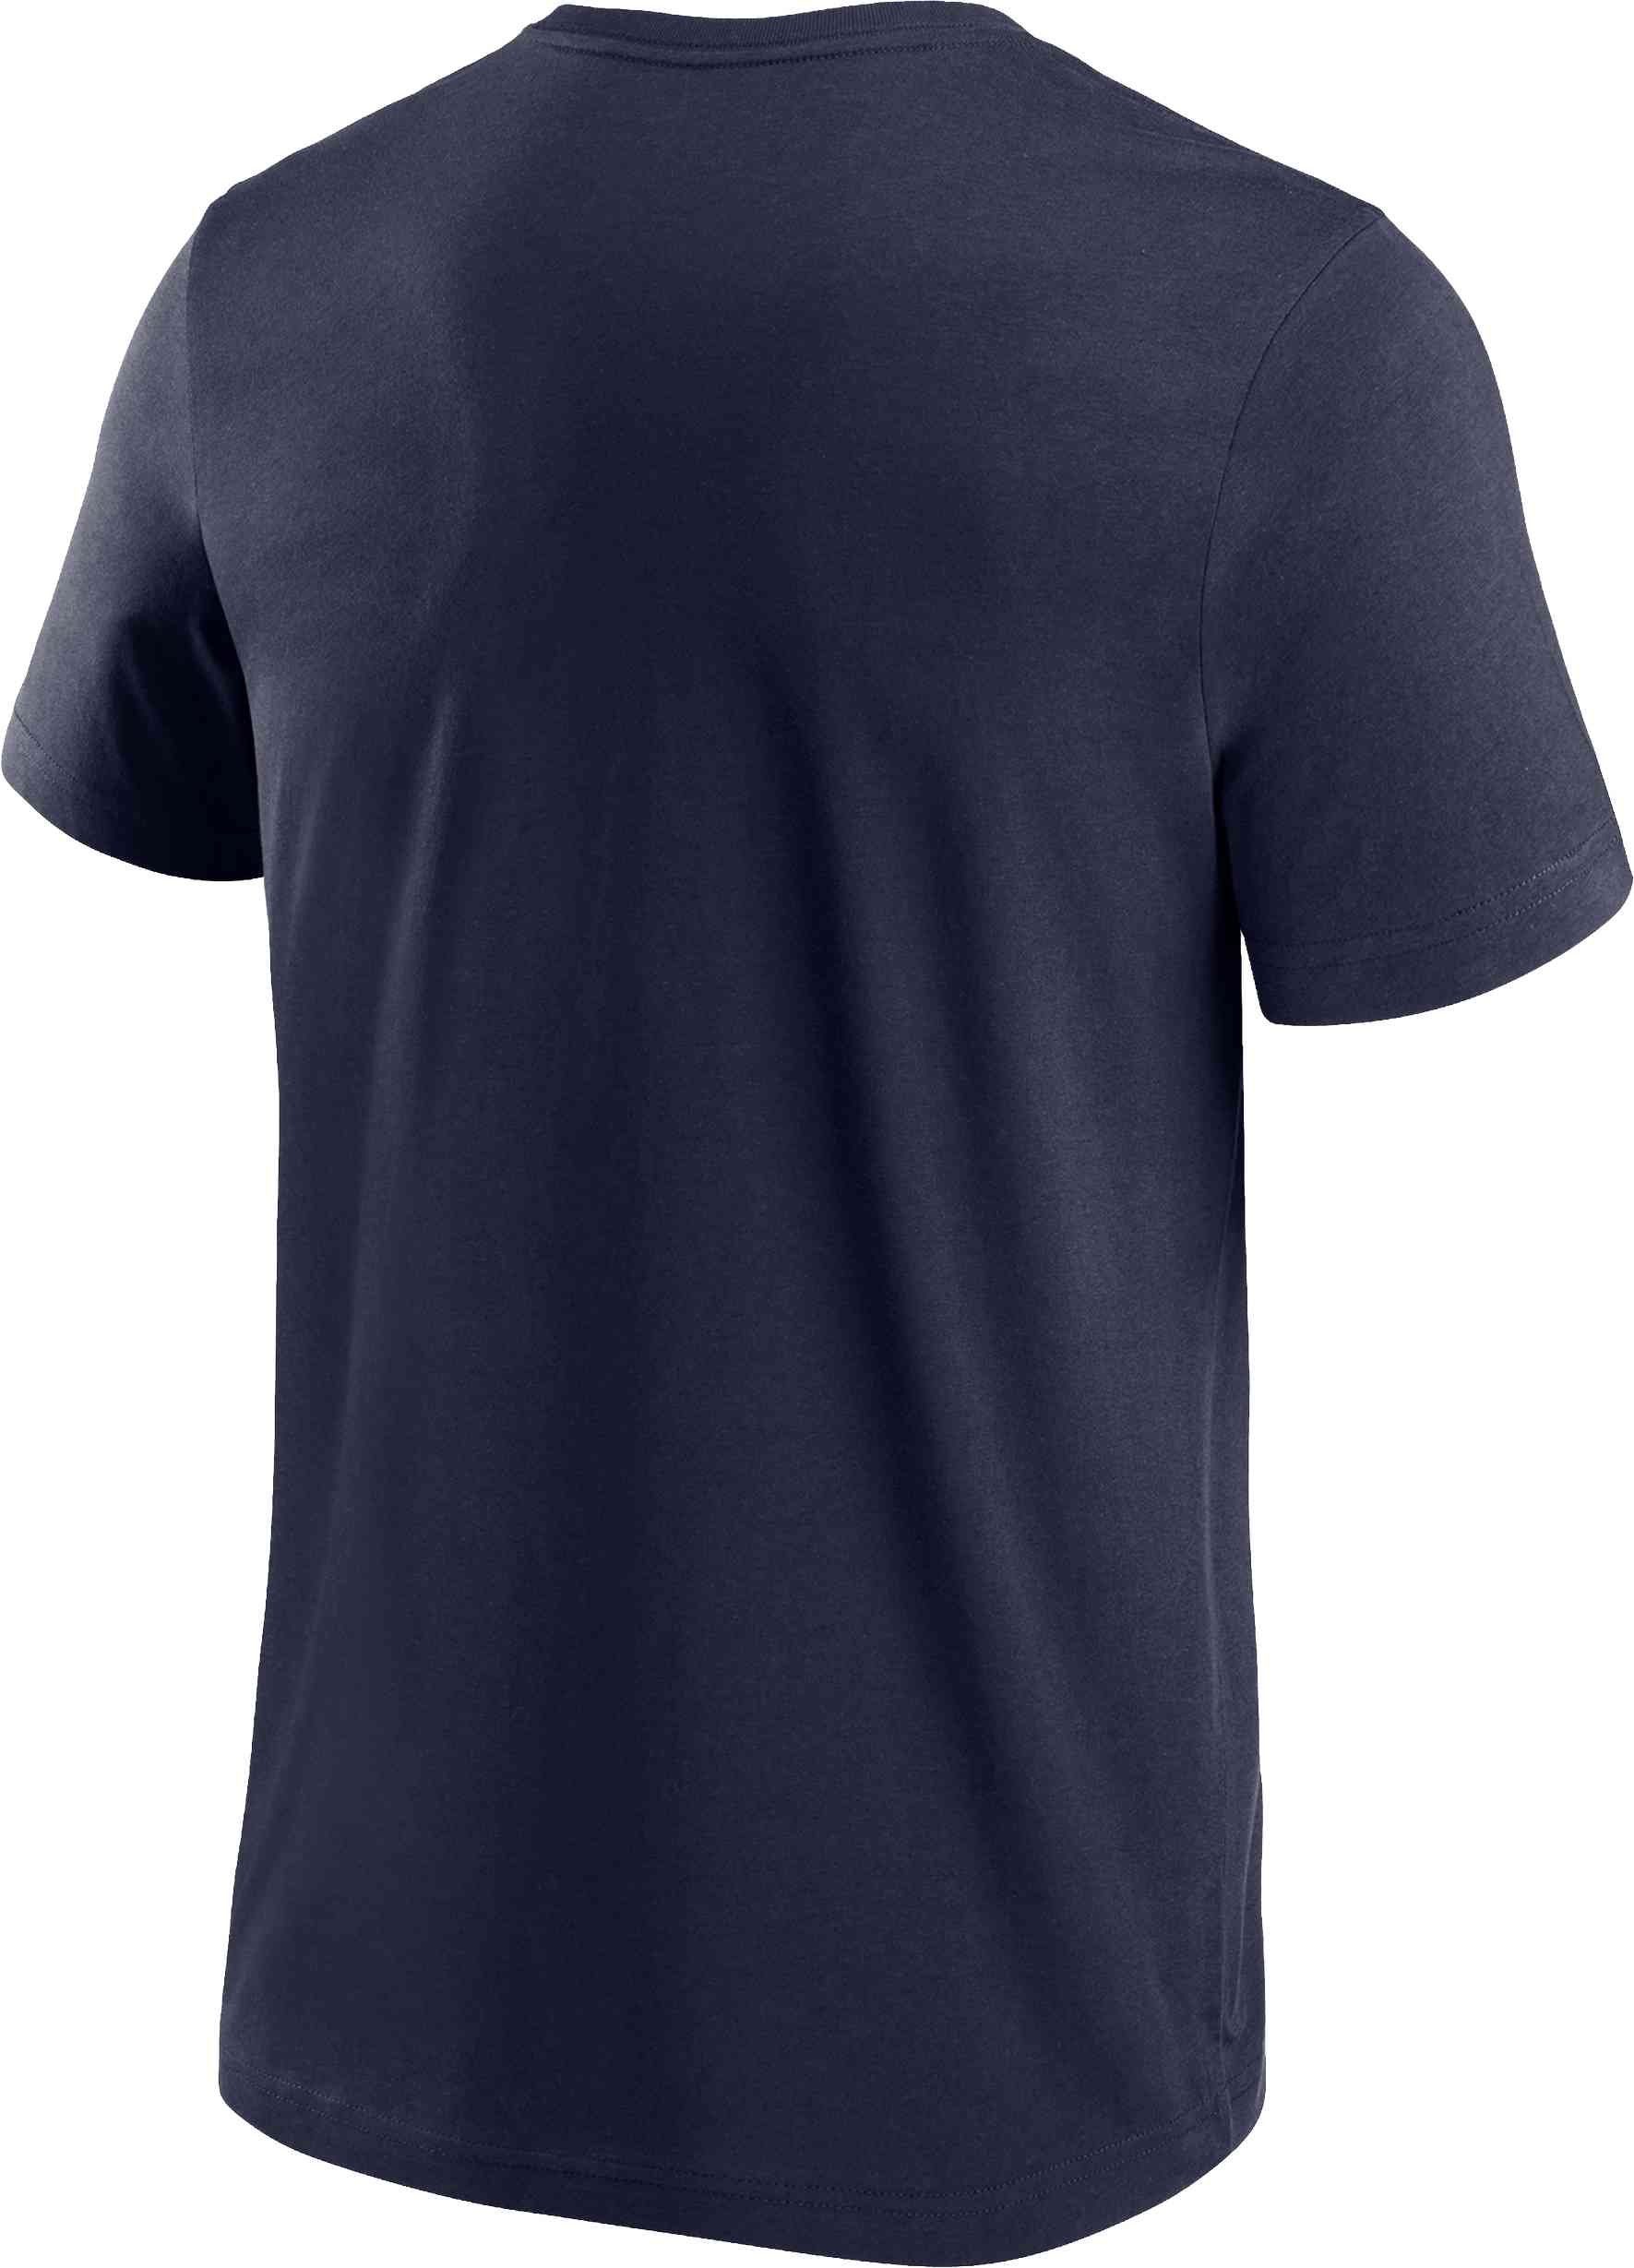 Cowboys Primary Fanatics Dallas T-Shirt NFL Graphic Logo